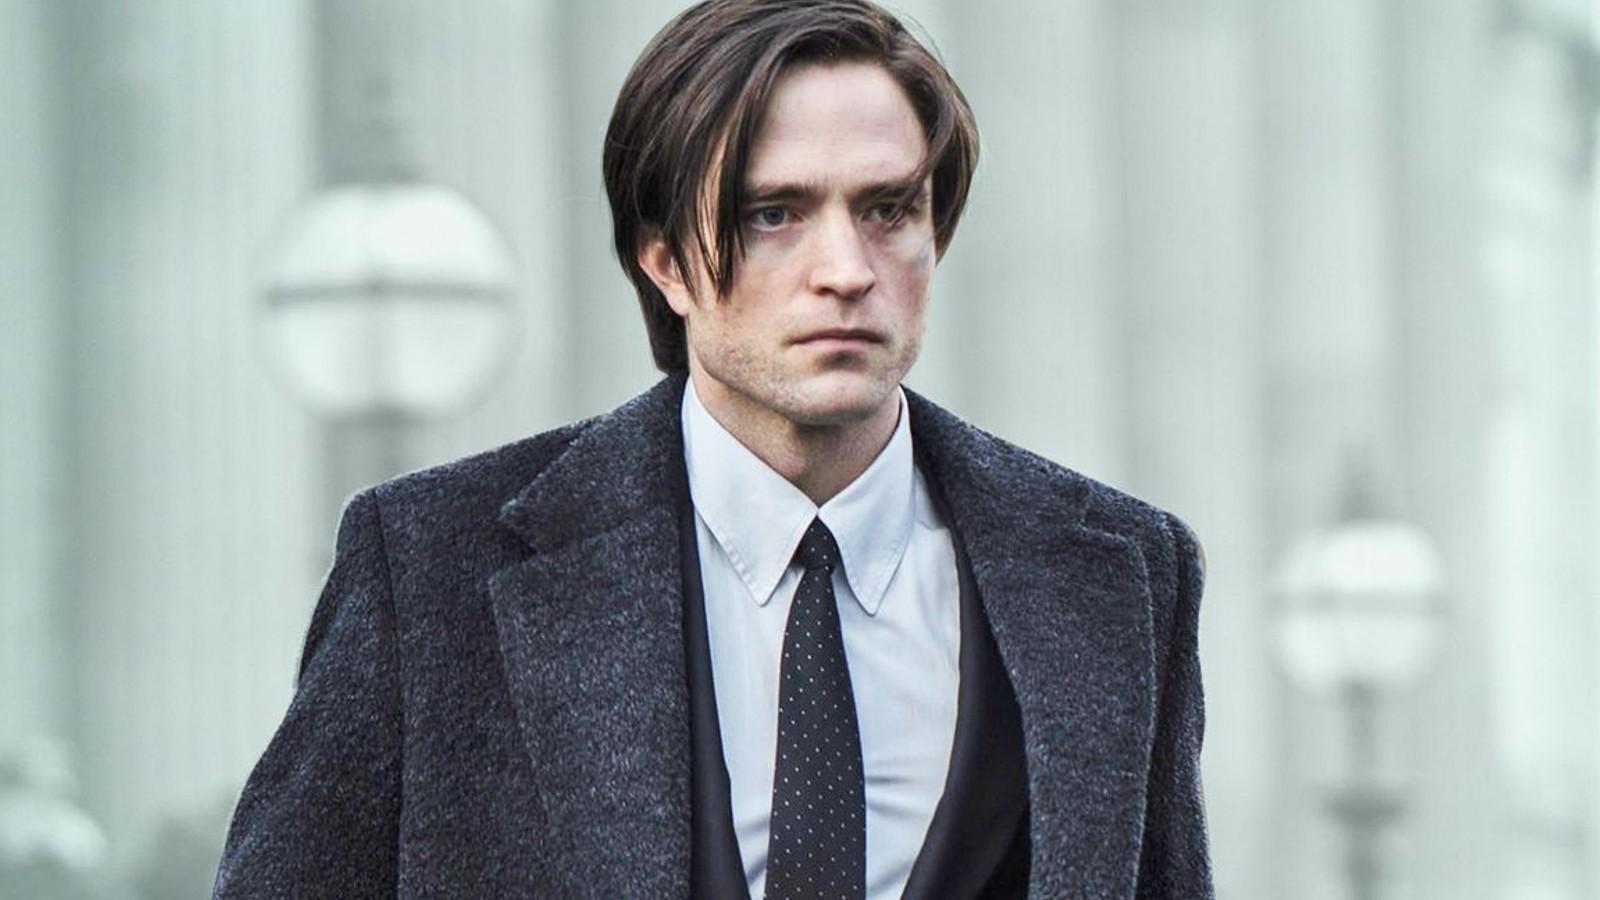 Robert Pattinson in a suit as Bruce Wayne in The Batman.